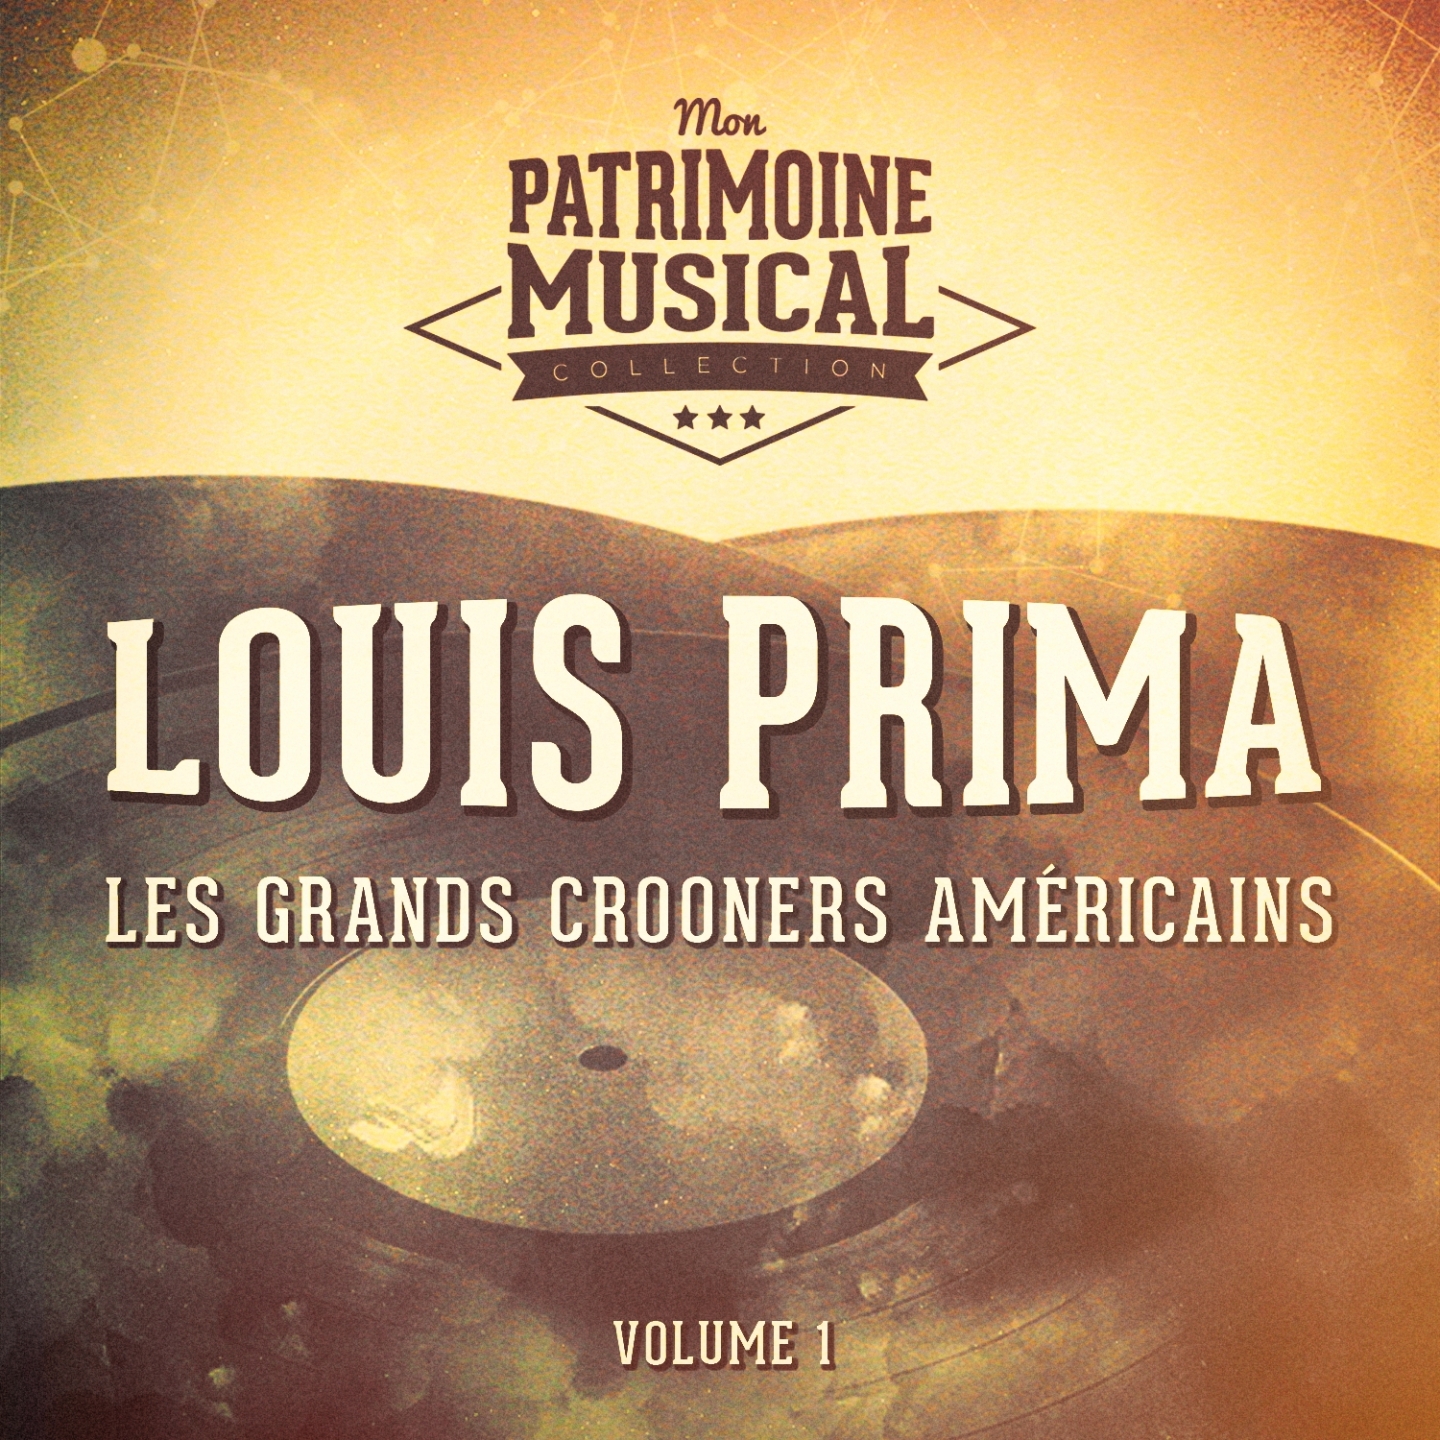 Les grands crooners ame ricains : Louis Prima, Vol. 1